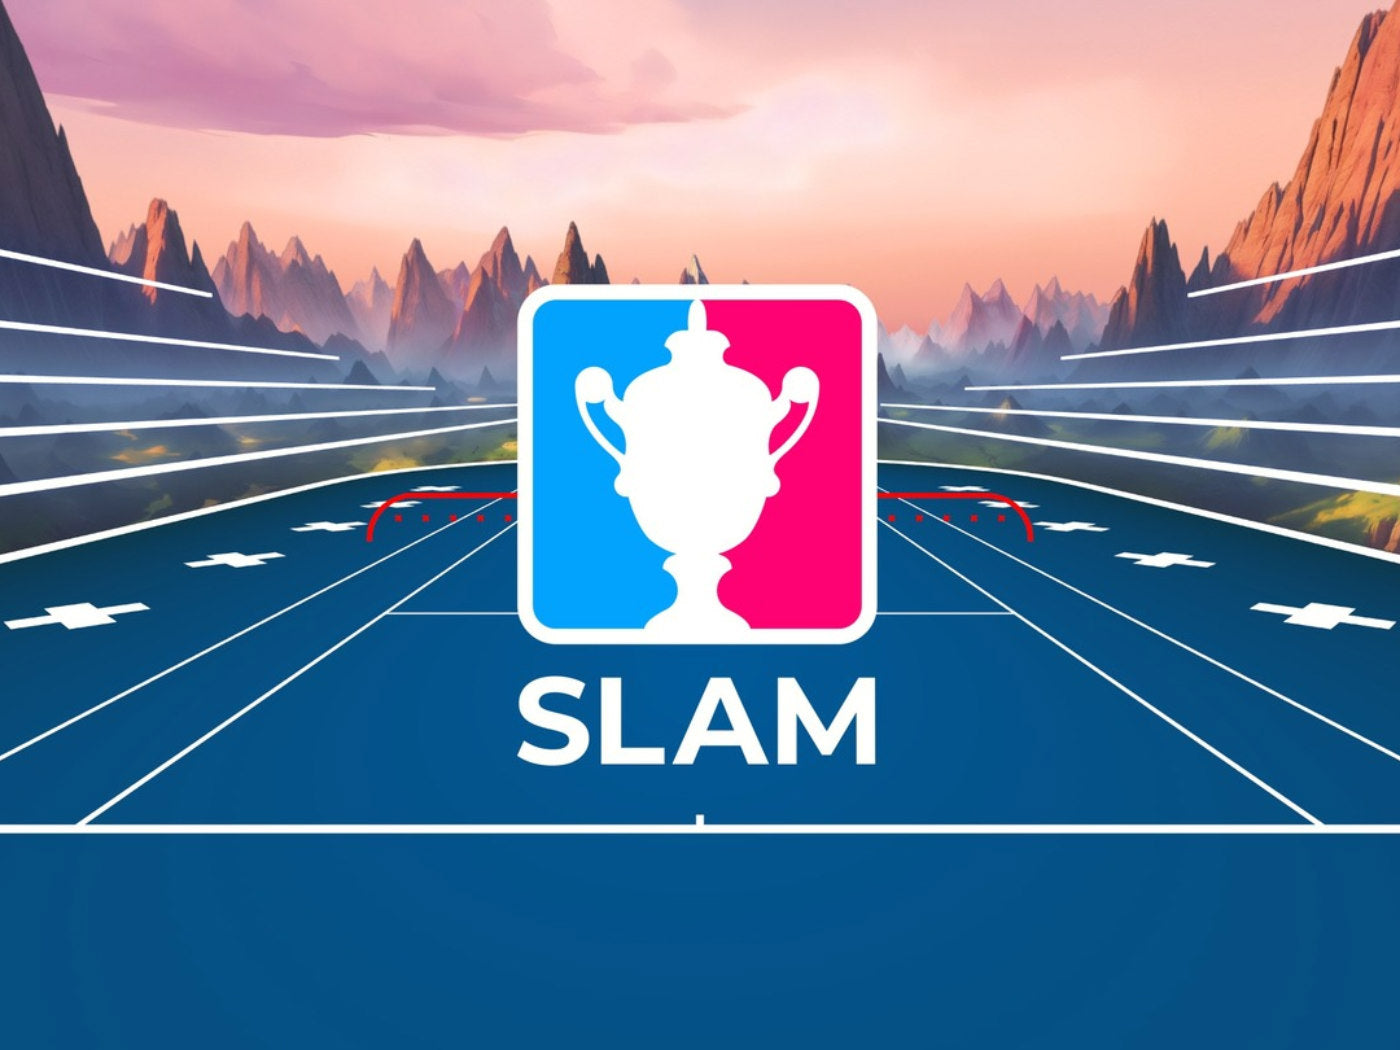 Slam Game Introduction - Rhythm-Based Tennis VR Game